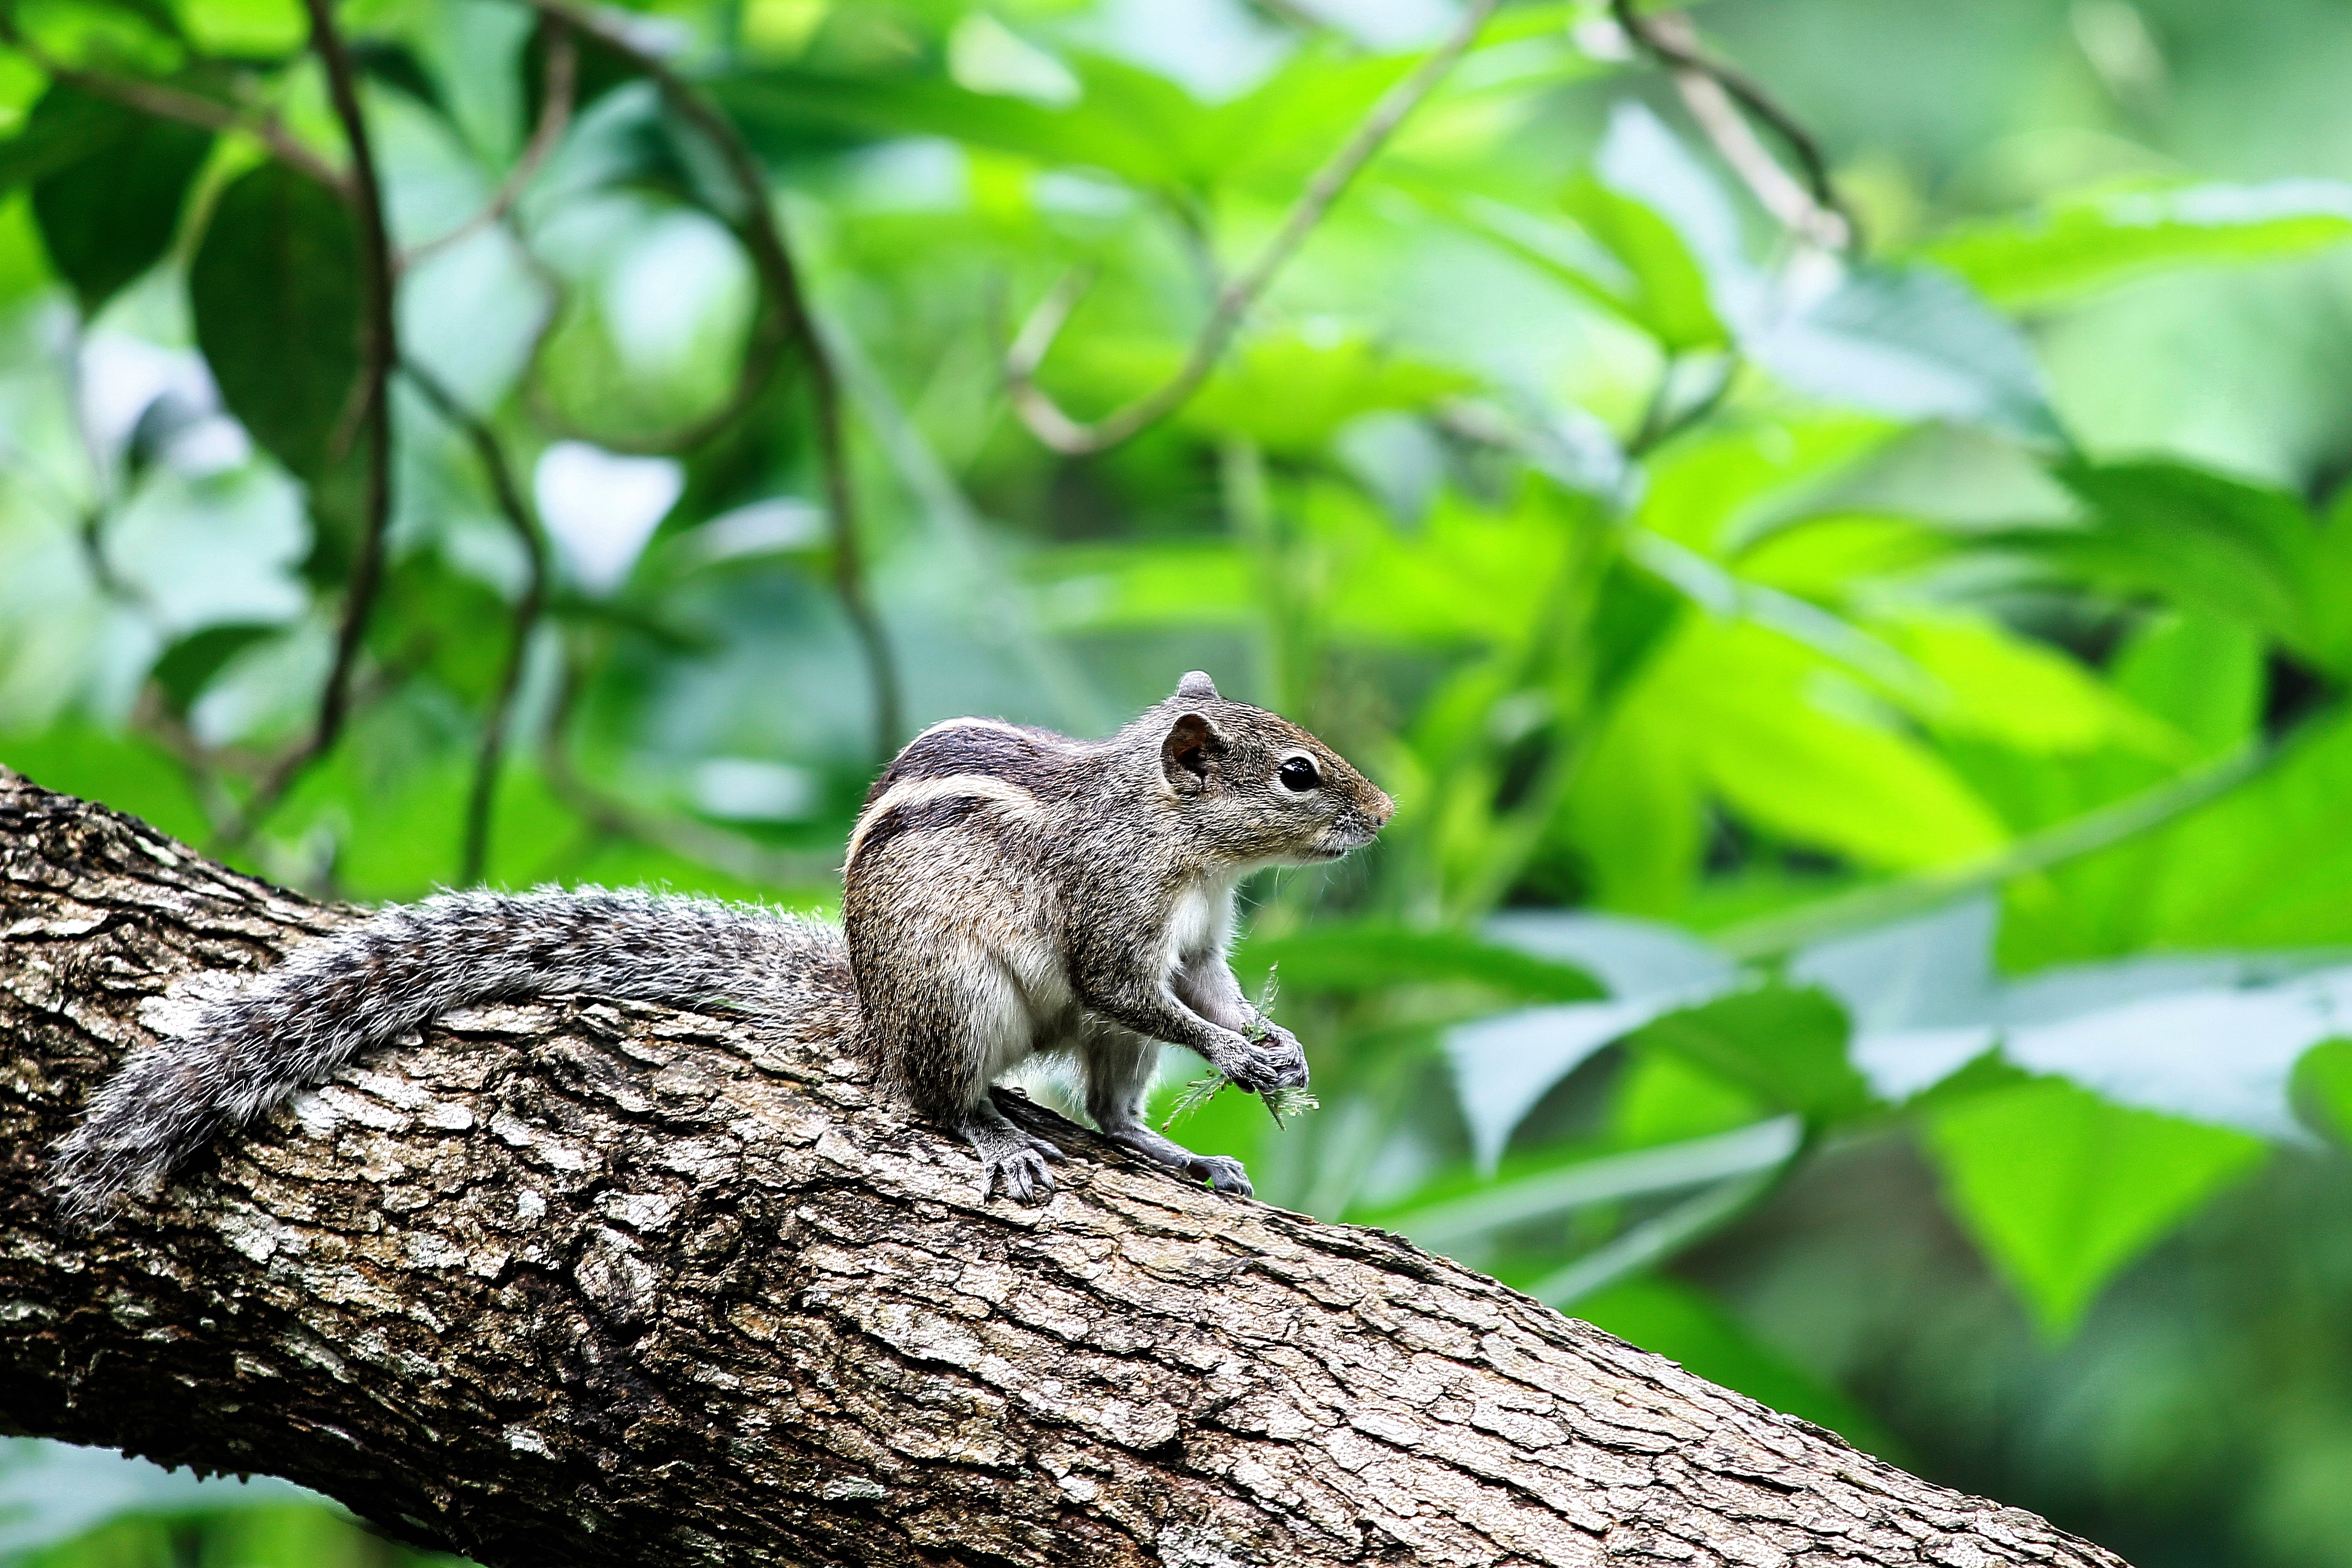 Chipmunk sitting on a tree branch